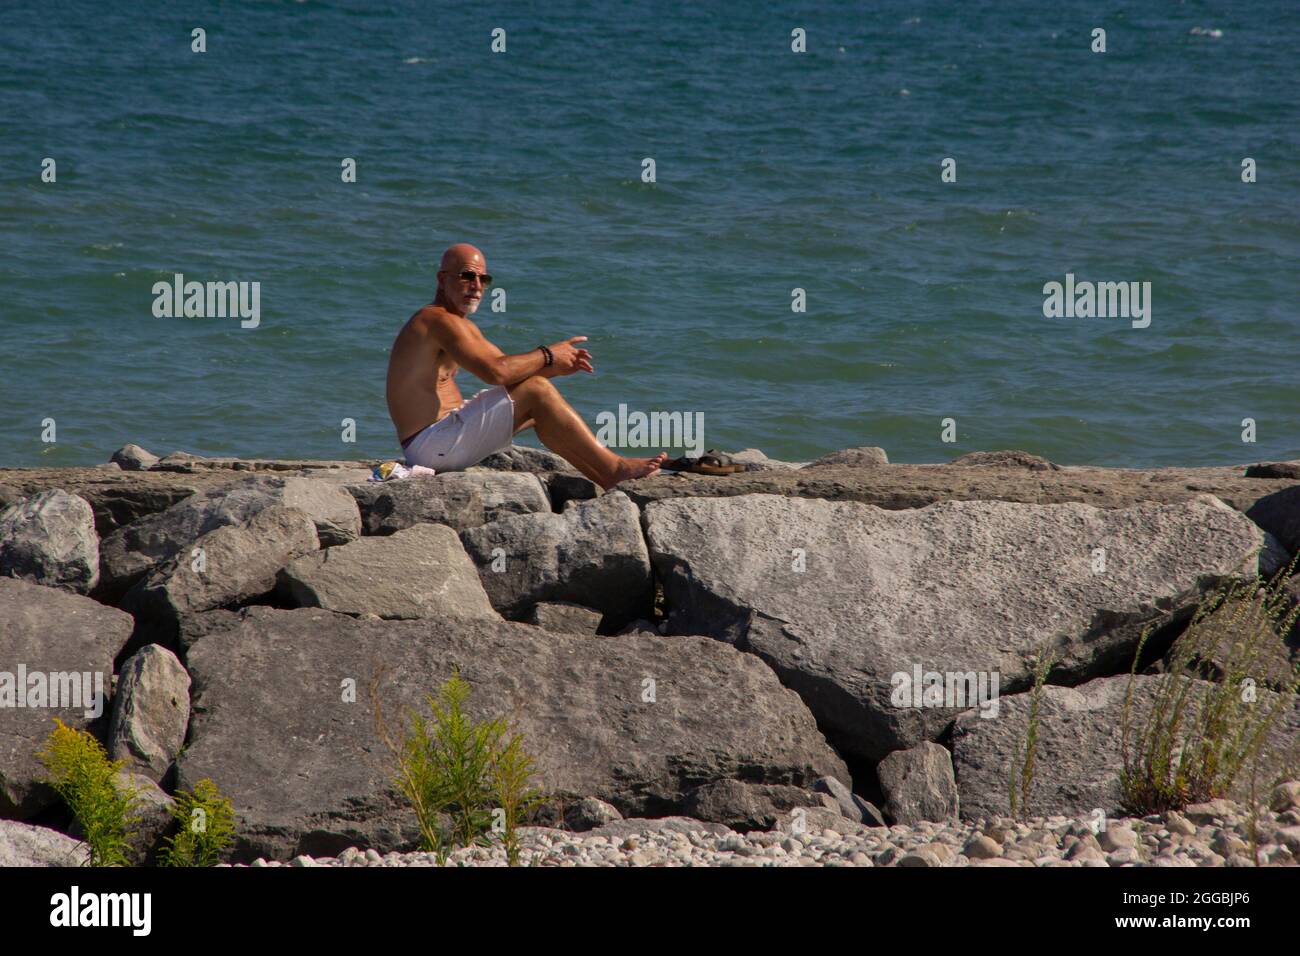 Sunbather on boulders Stock Photo